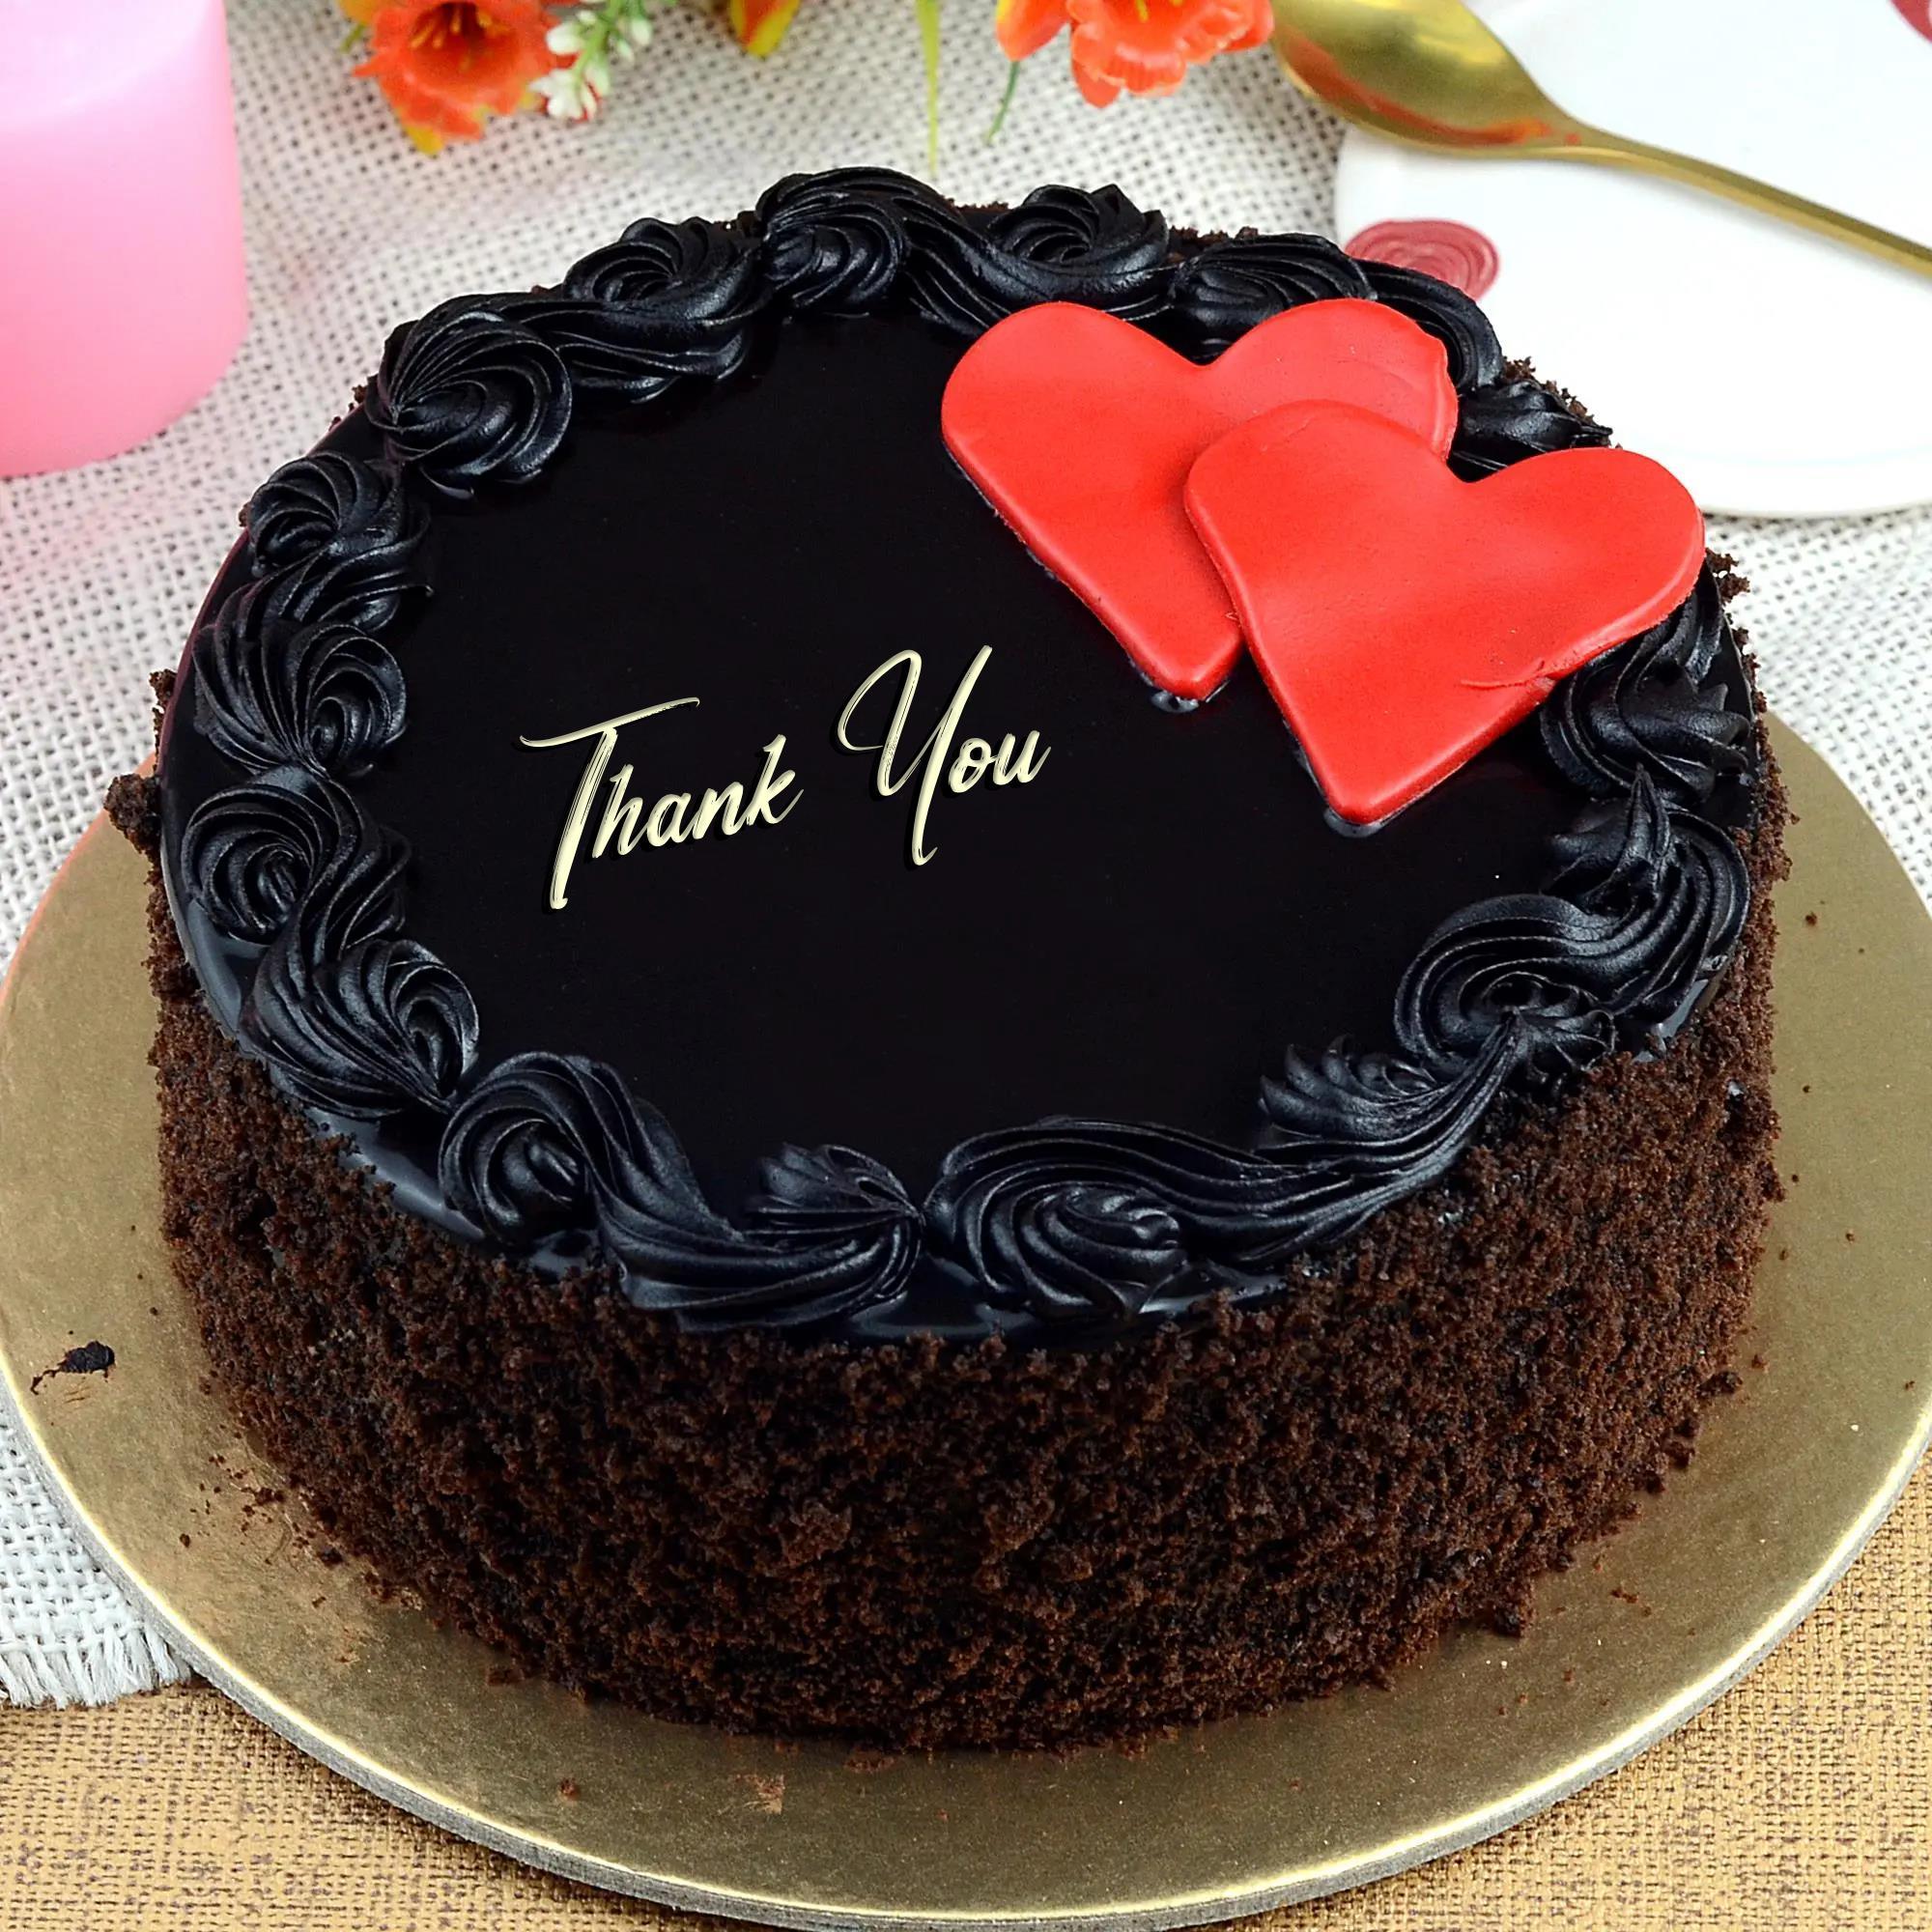 Thank You 1 Kg Cake - Chocolate